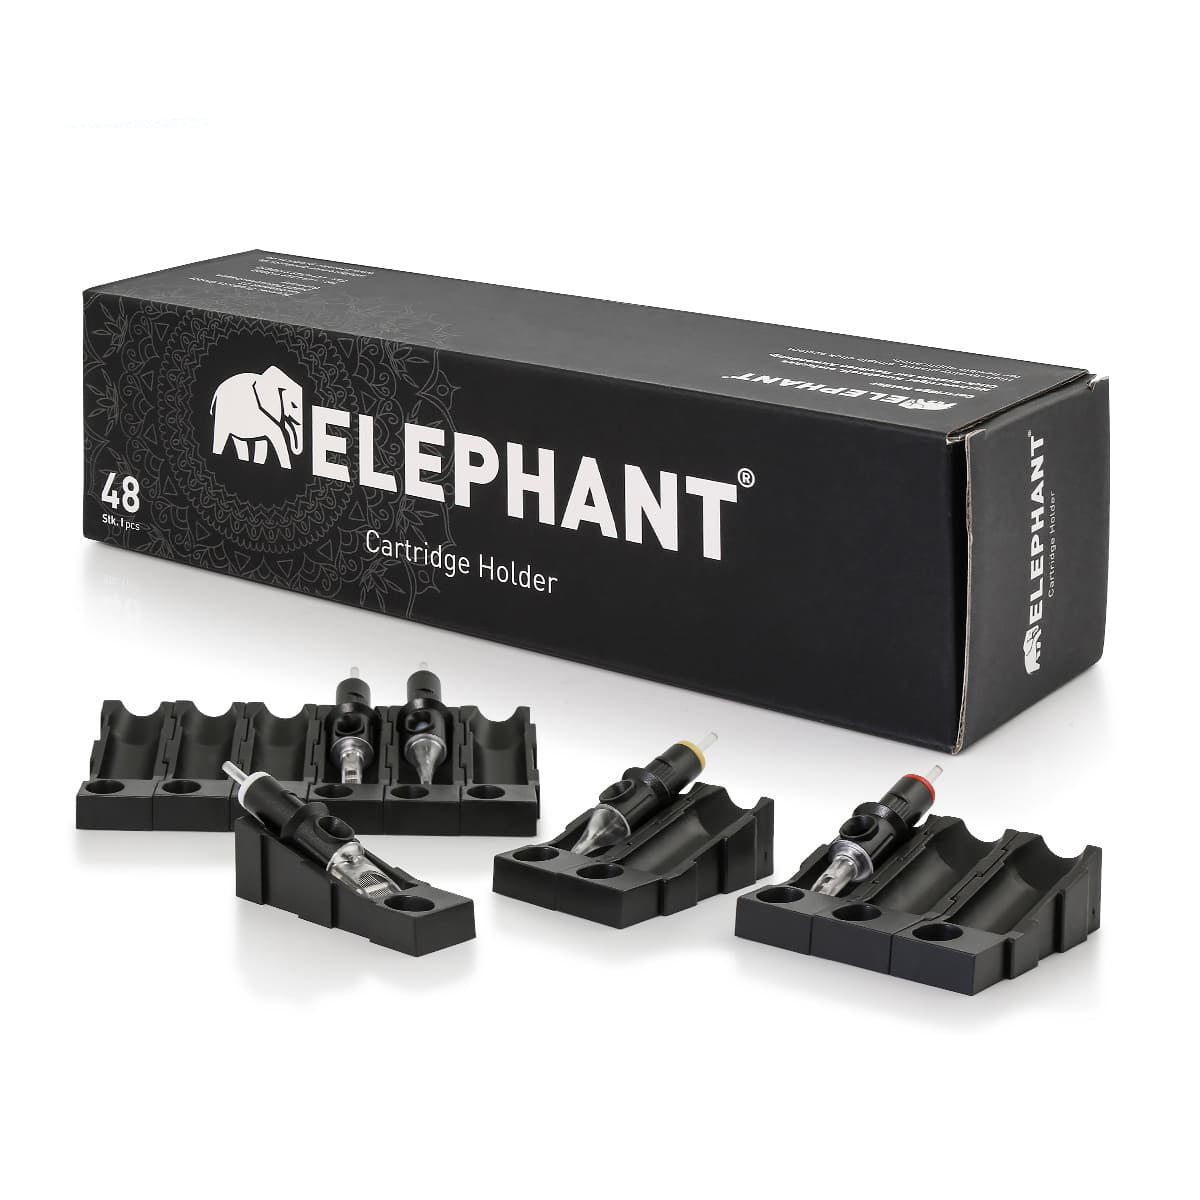 Elephant - Cartridge Holder - 48stk